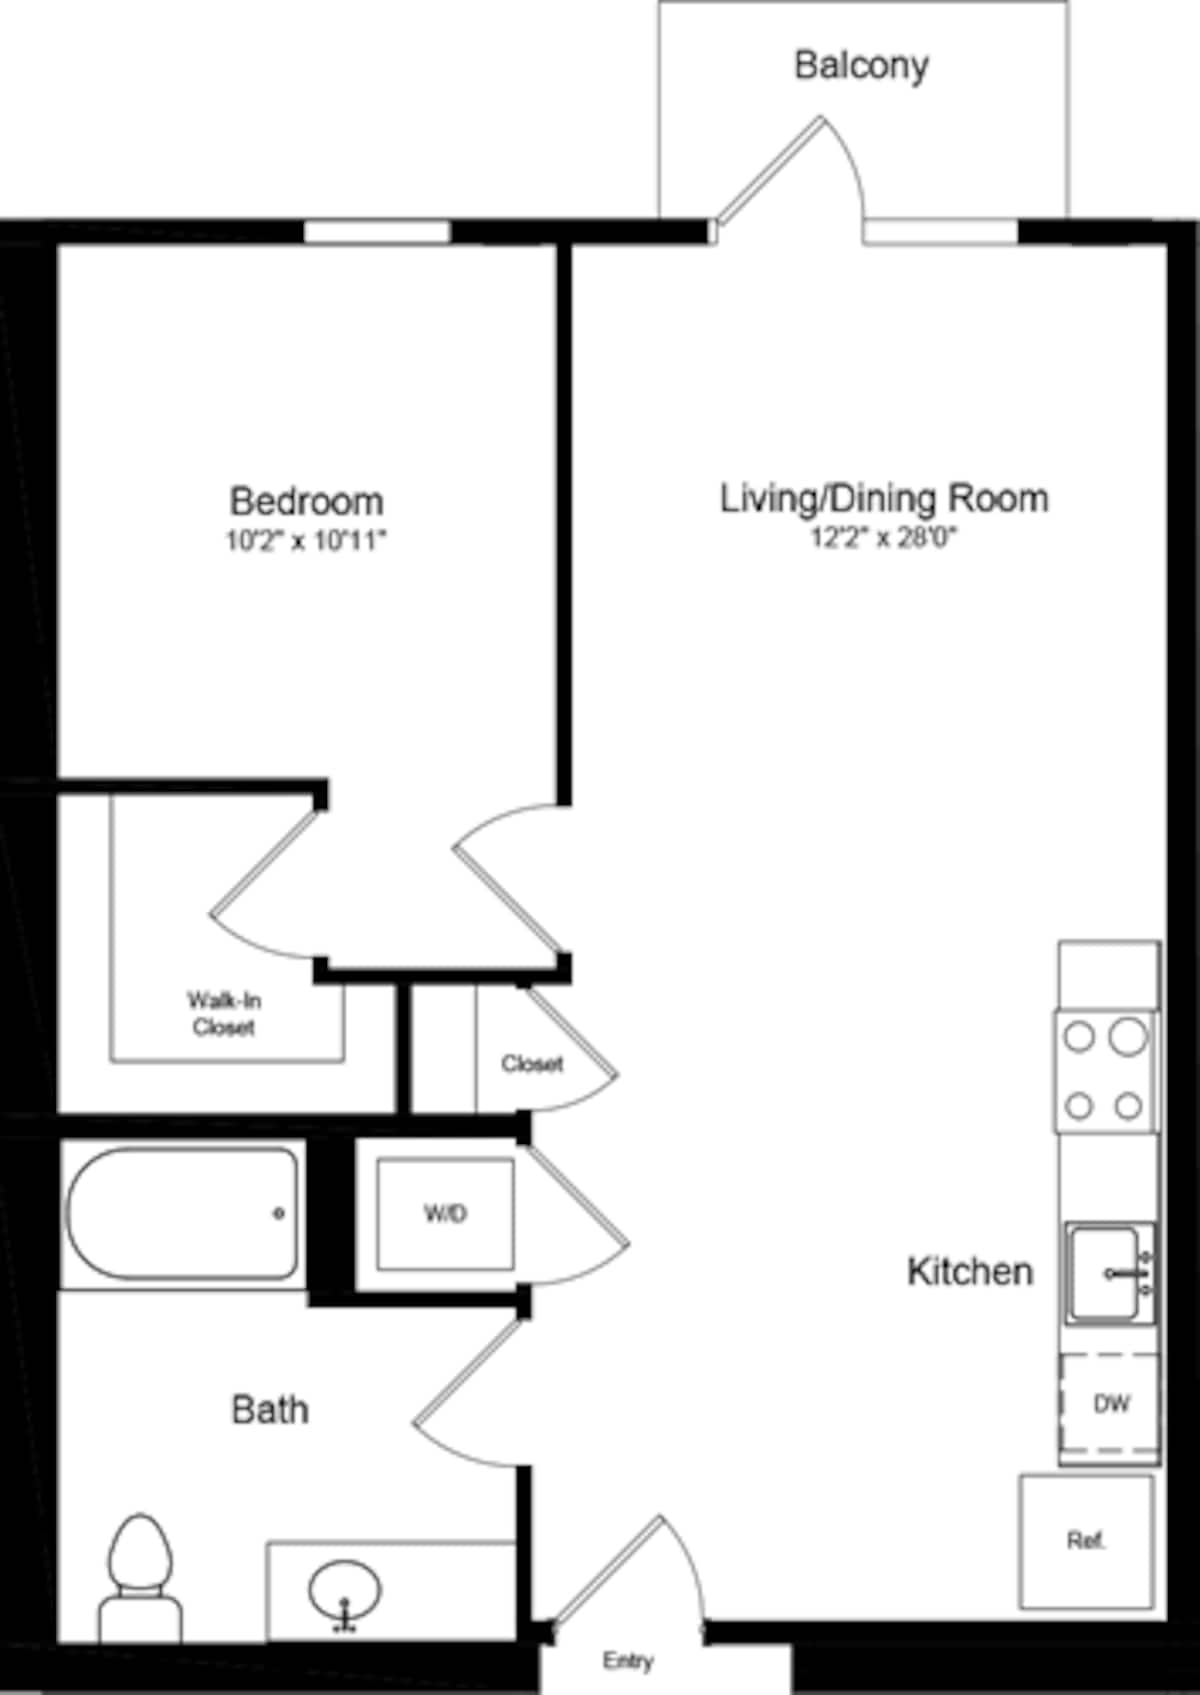 Floorplan diagram for 1 Bedroom A1 with Balcony, showing 1 bedroom